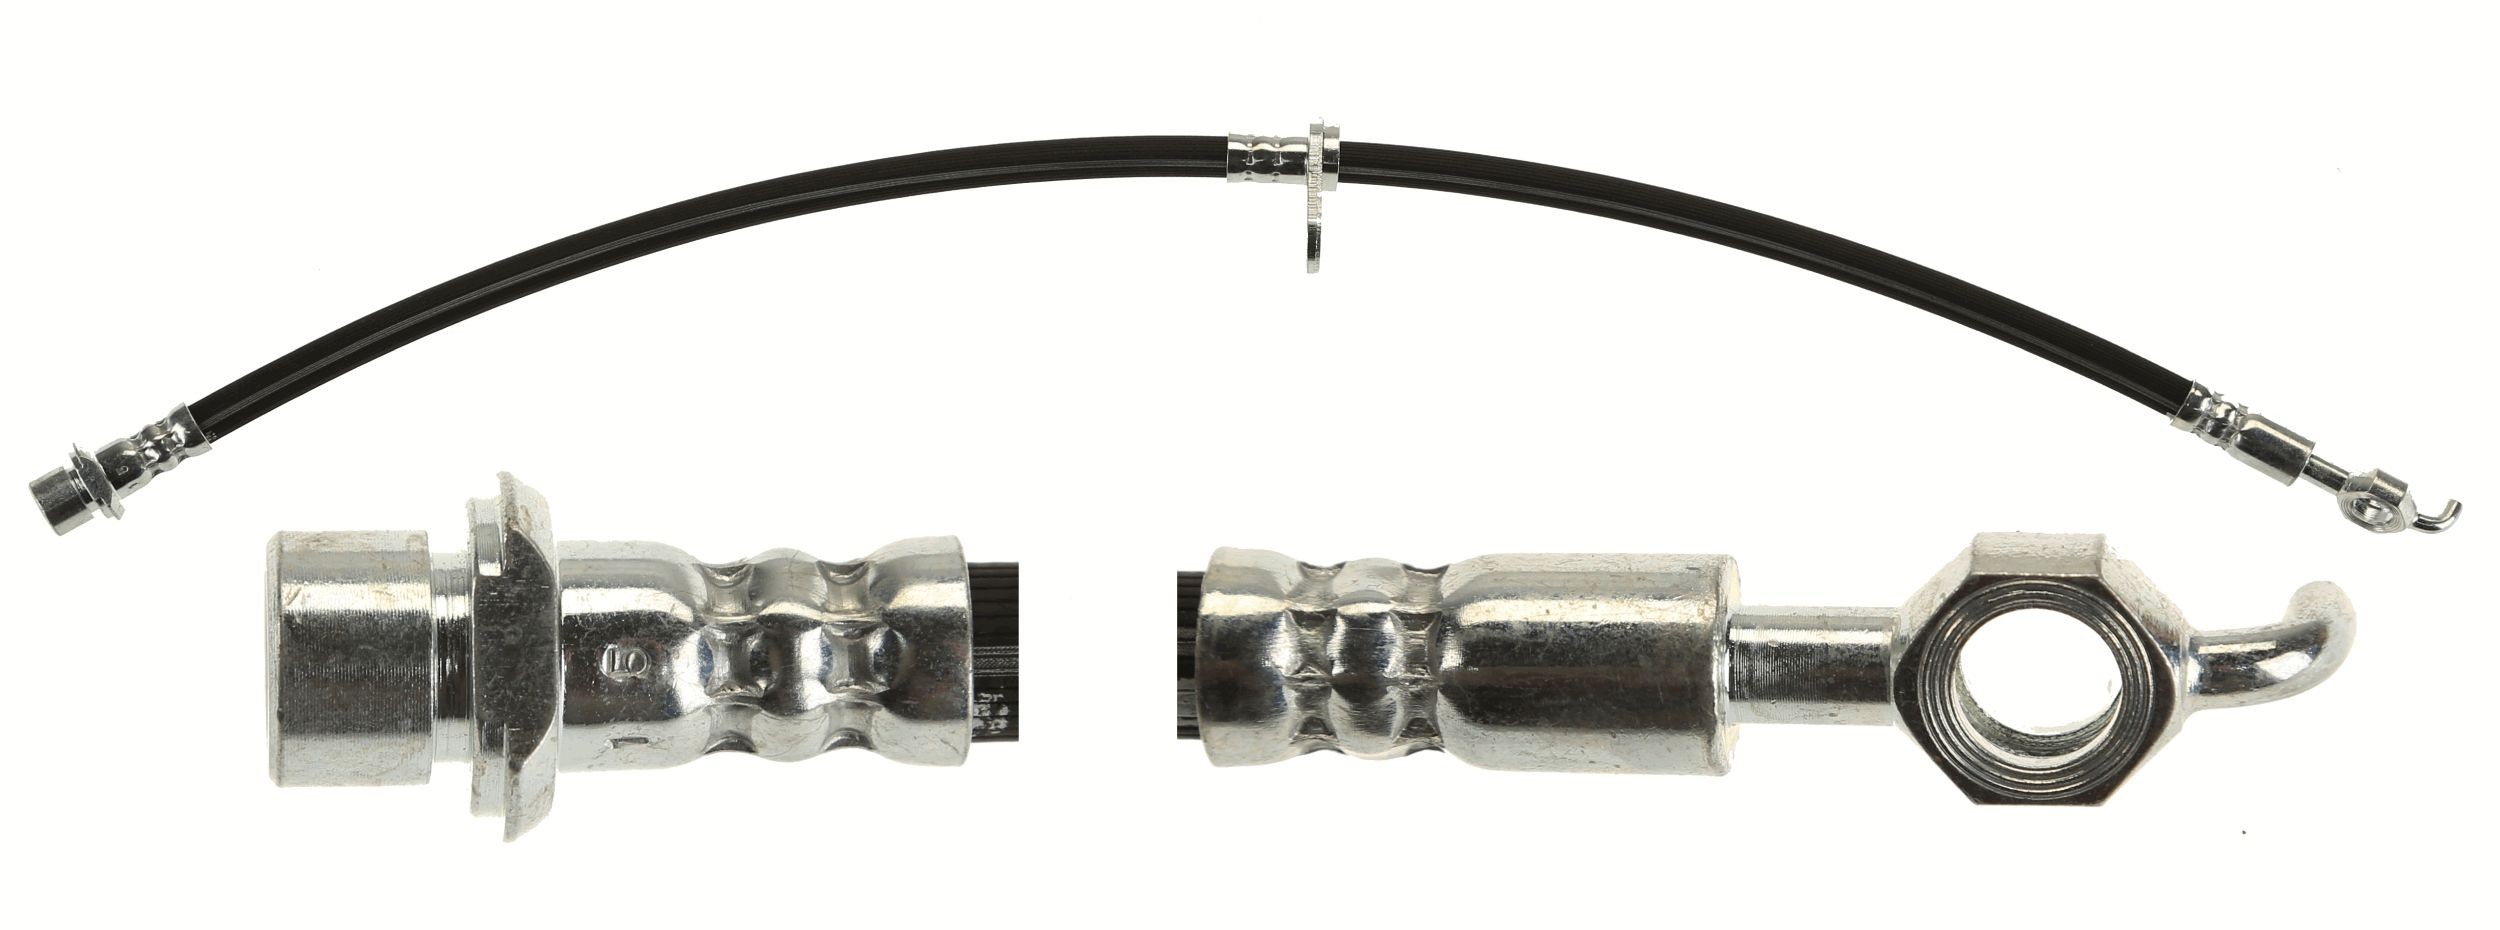 TRW 612 mm, M10x1, Internal Thread Length: 612mm, Thread Size 1: M10x1, Thread Size 2: Banjo Brake line PHD1191 buy